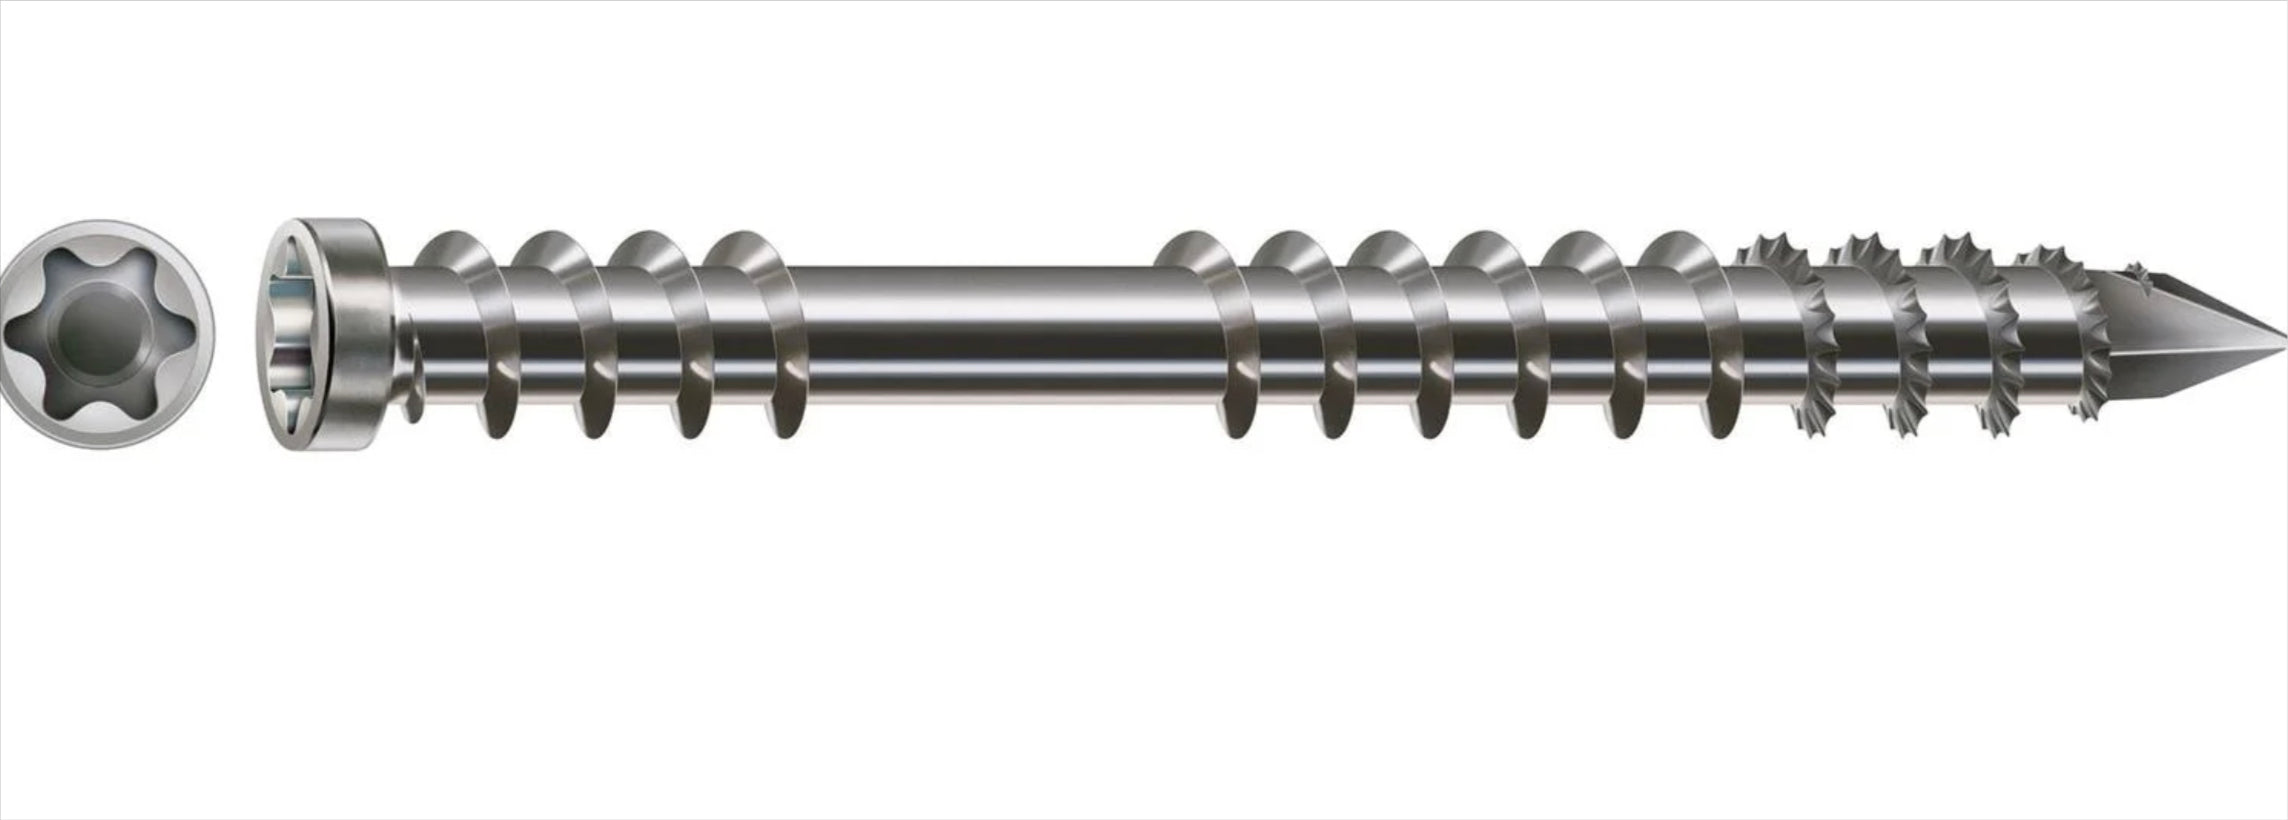 Spax Outdoor Decking Screw Diameter 5Mm, Length 60Mm Stainless Steel